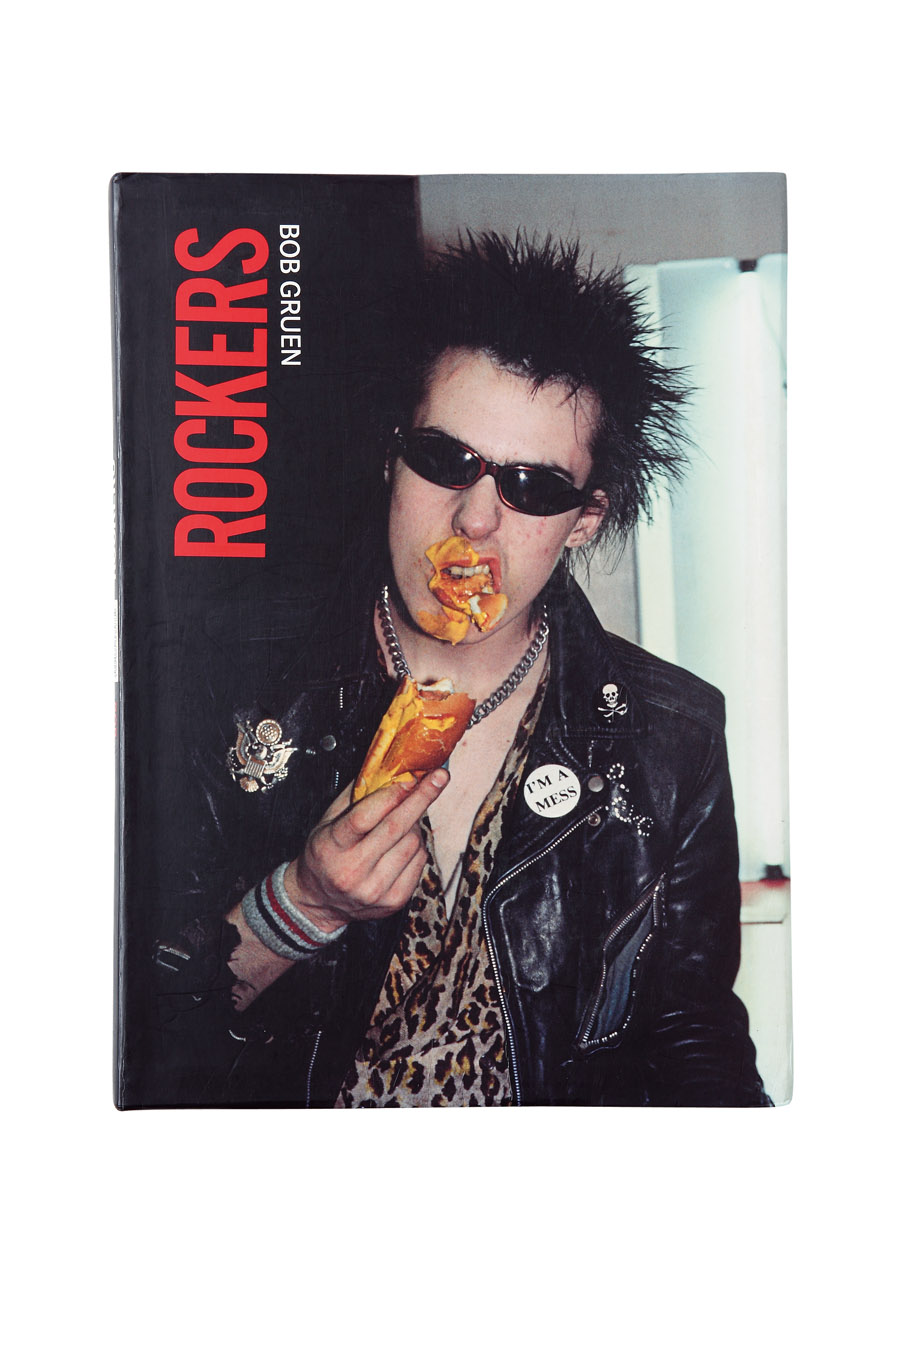 3. Livro 'Rockers, do Bob Gruen. Fotos das lendas do rock.'